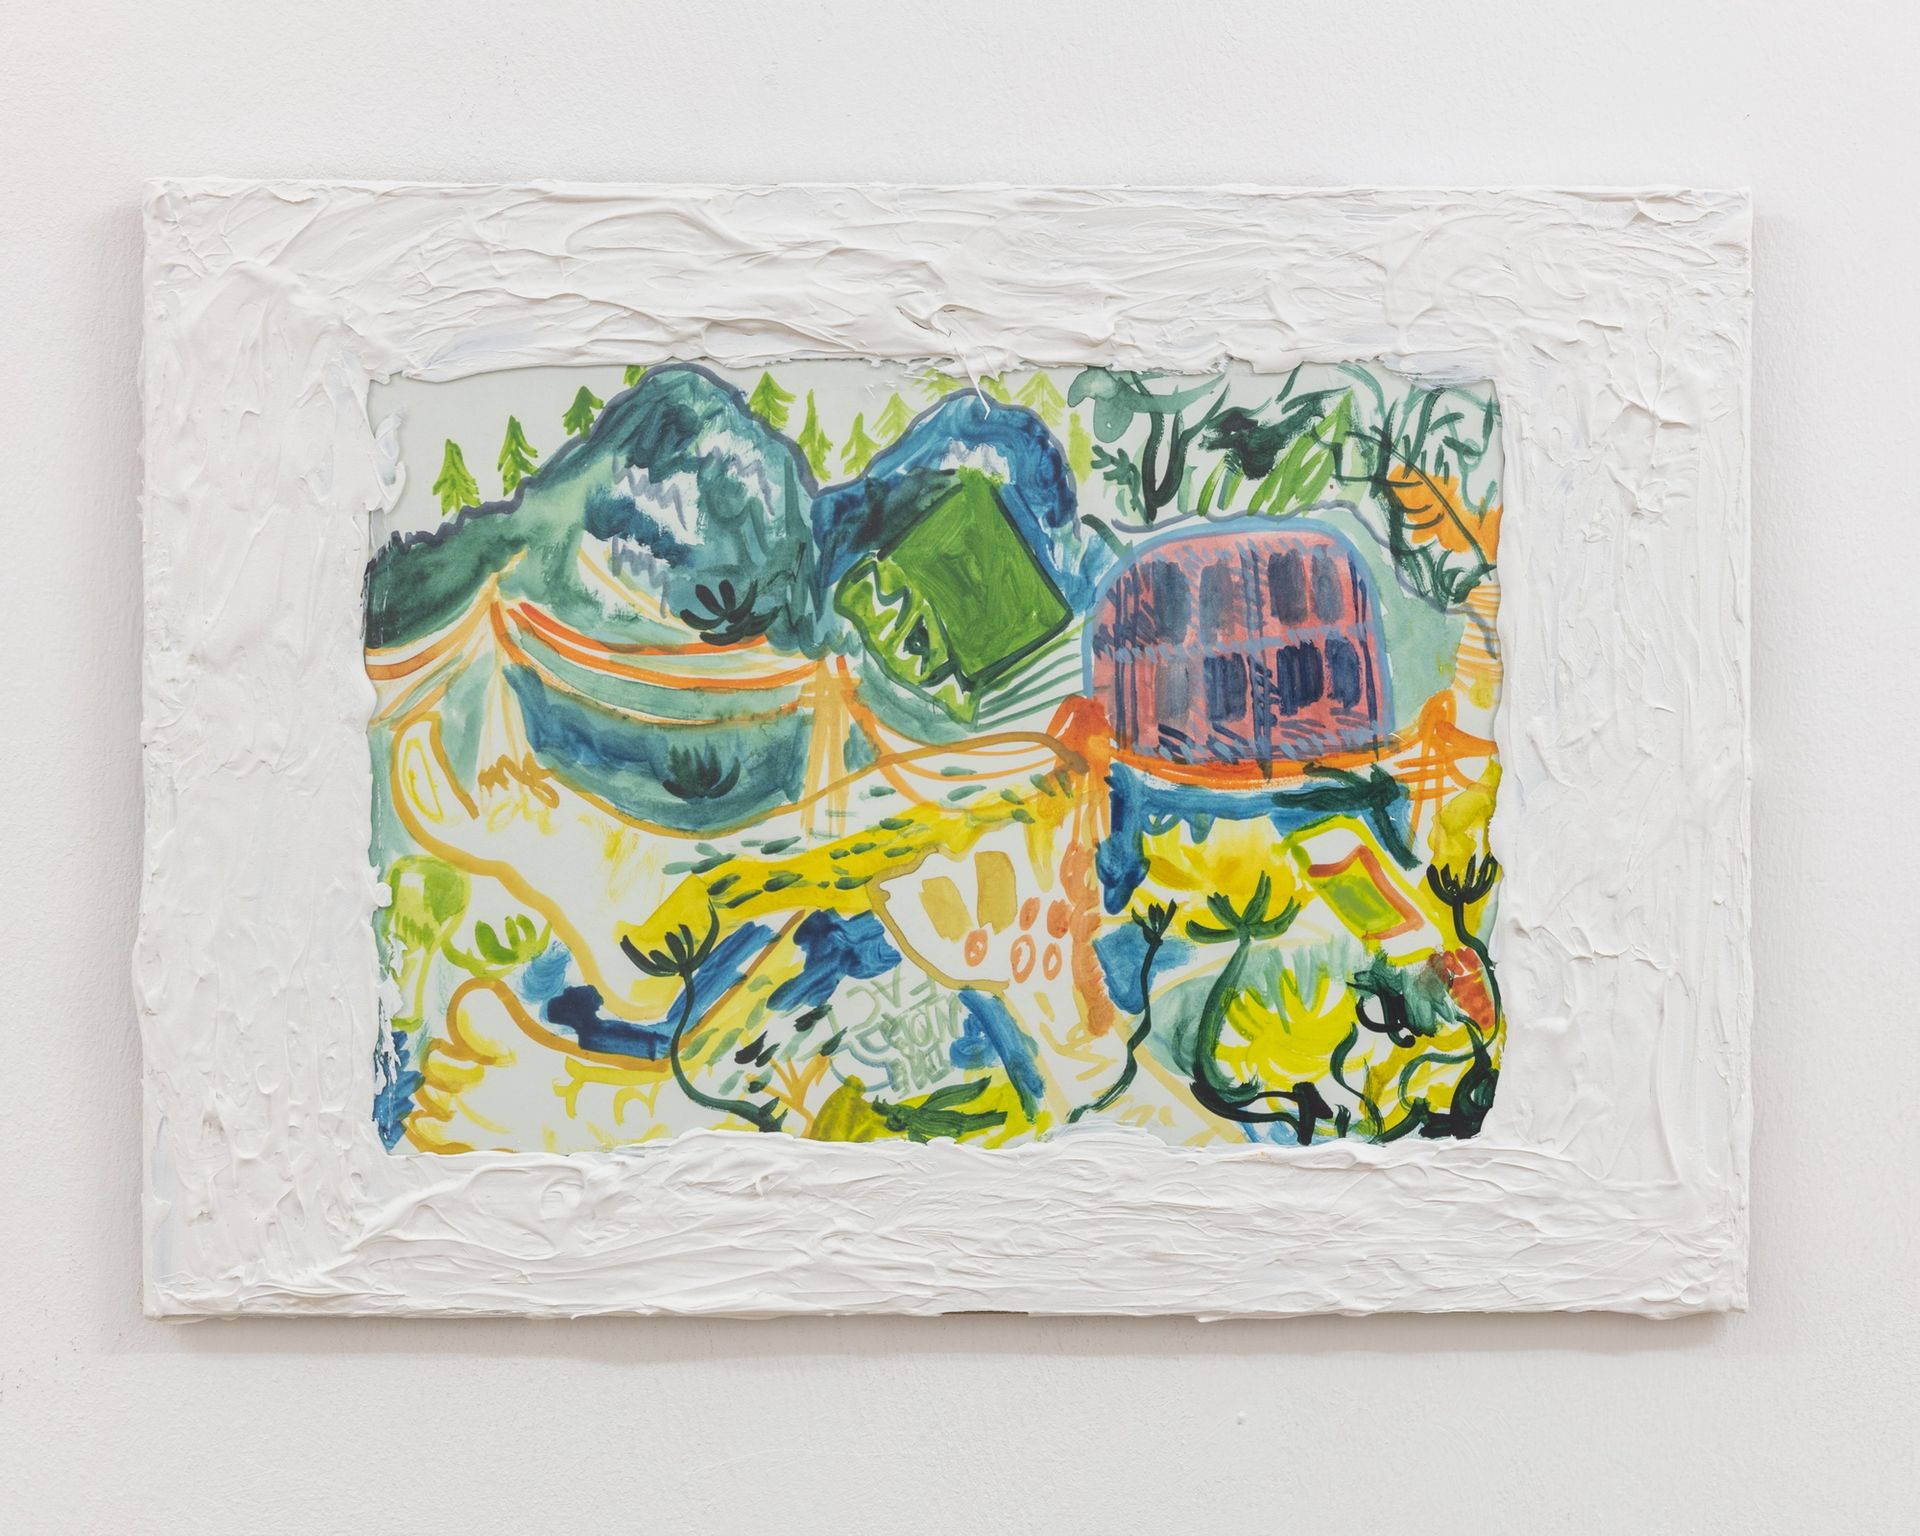 Anna McCarthy, Post-Erdbeer Wand (Kochelsee), 2020, water colour on paper, acrylic on glass, 30 × 42 cm, photo: Sebastian Kissel